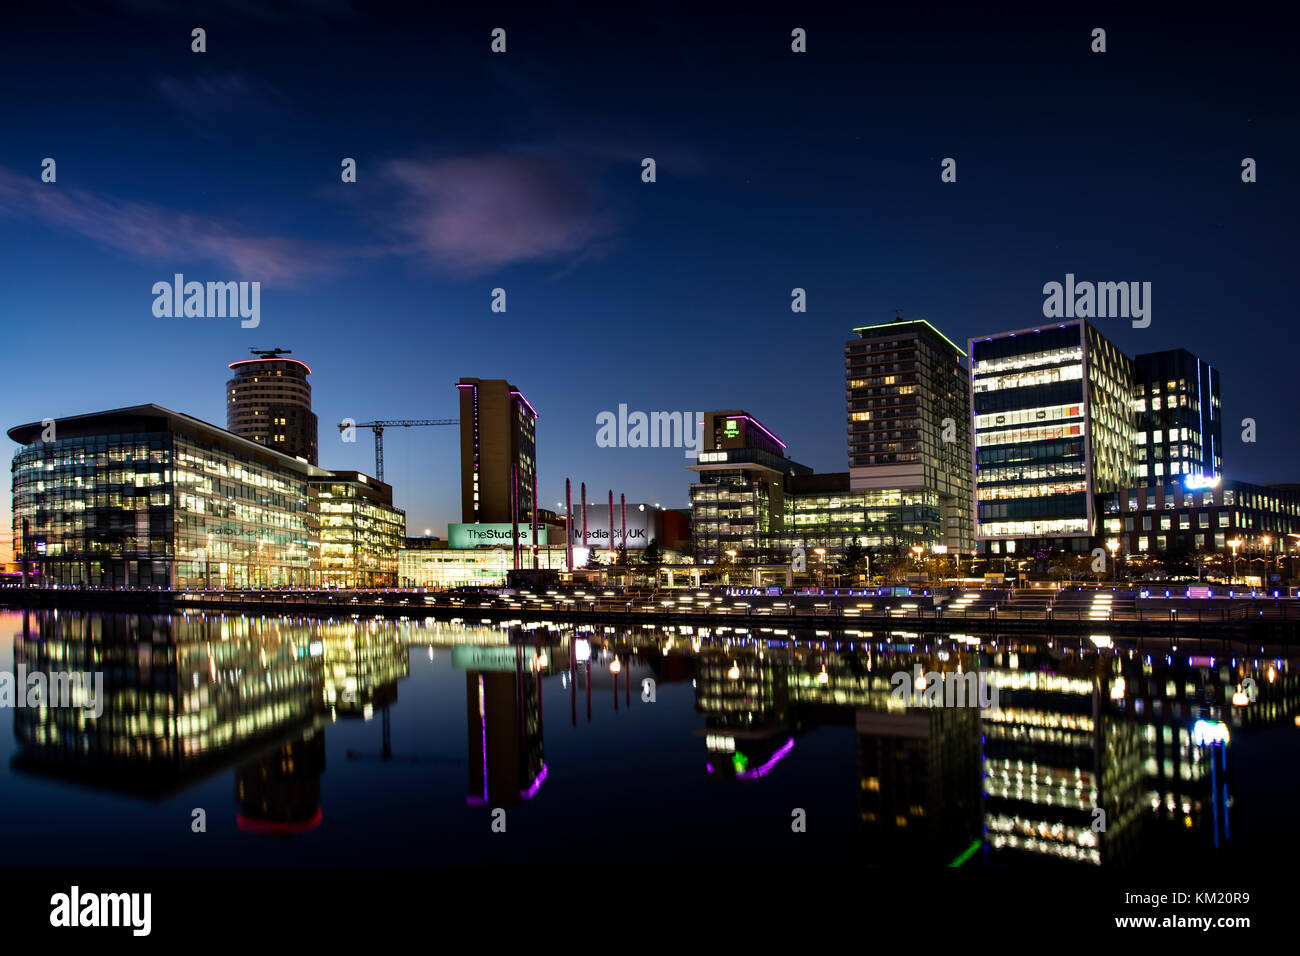 MediaCity UK, Salford Quays, Manchester, at dusk. Stock Photo